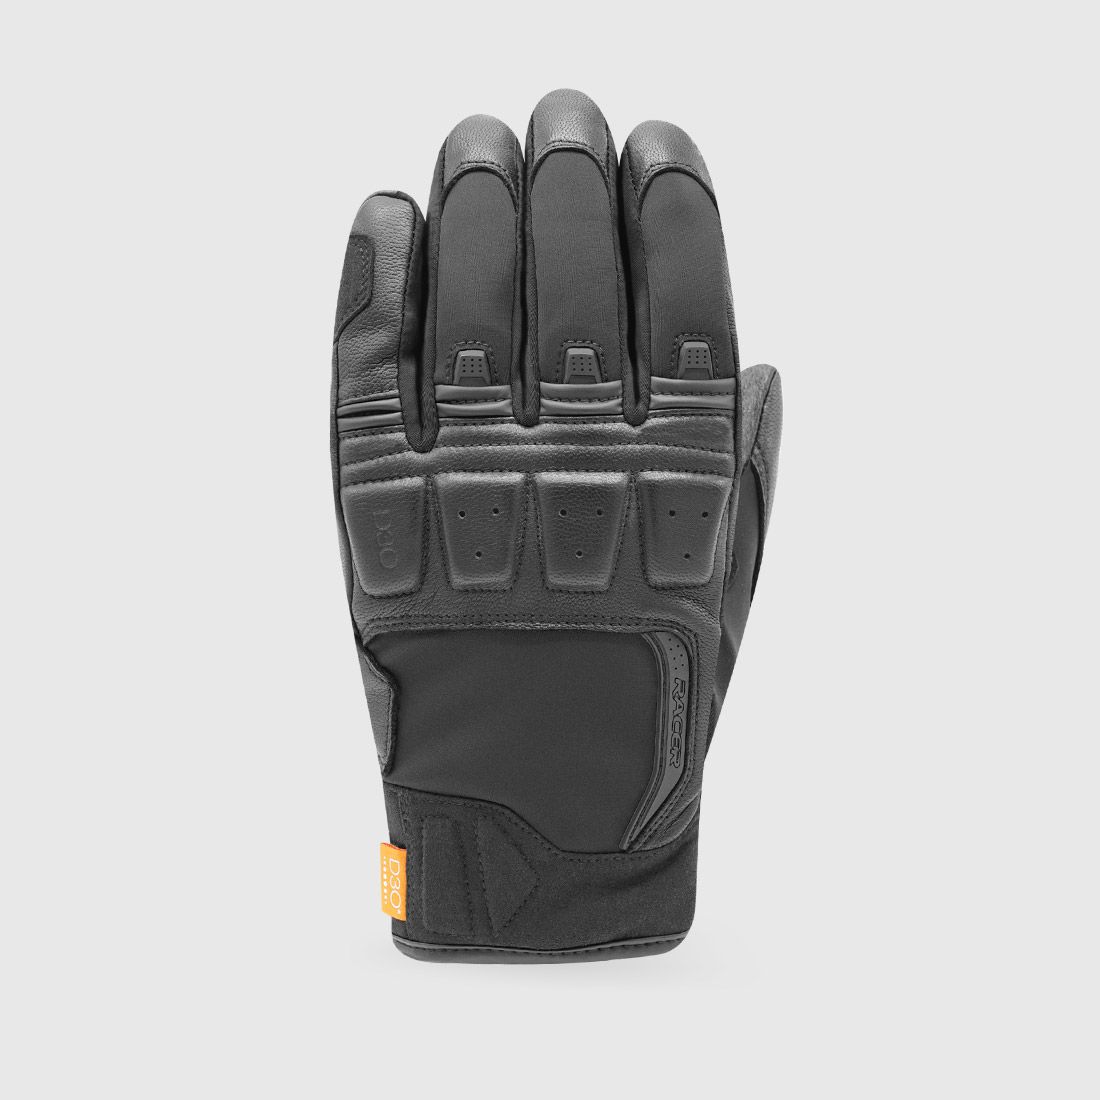 RONIN WINTER - Winter racer glove